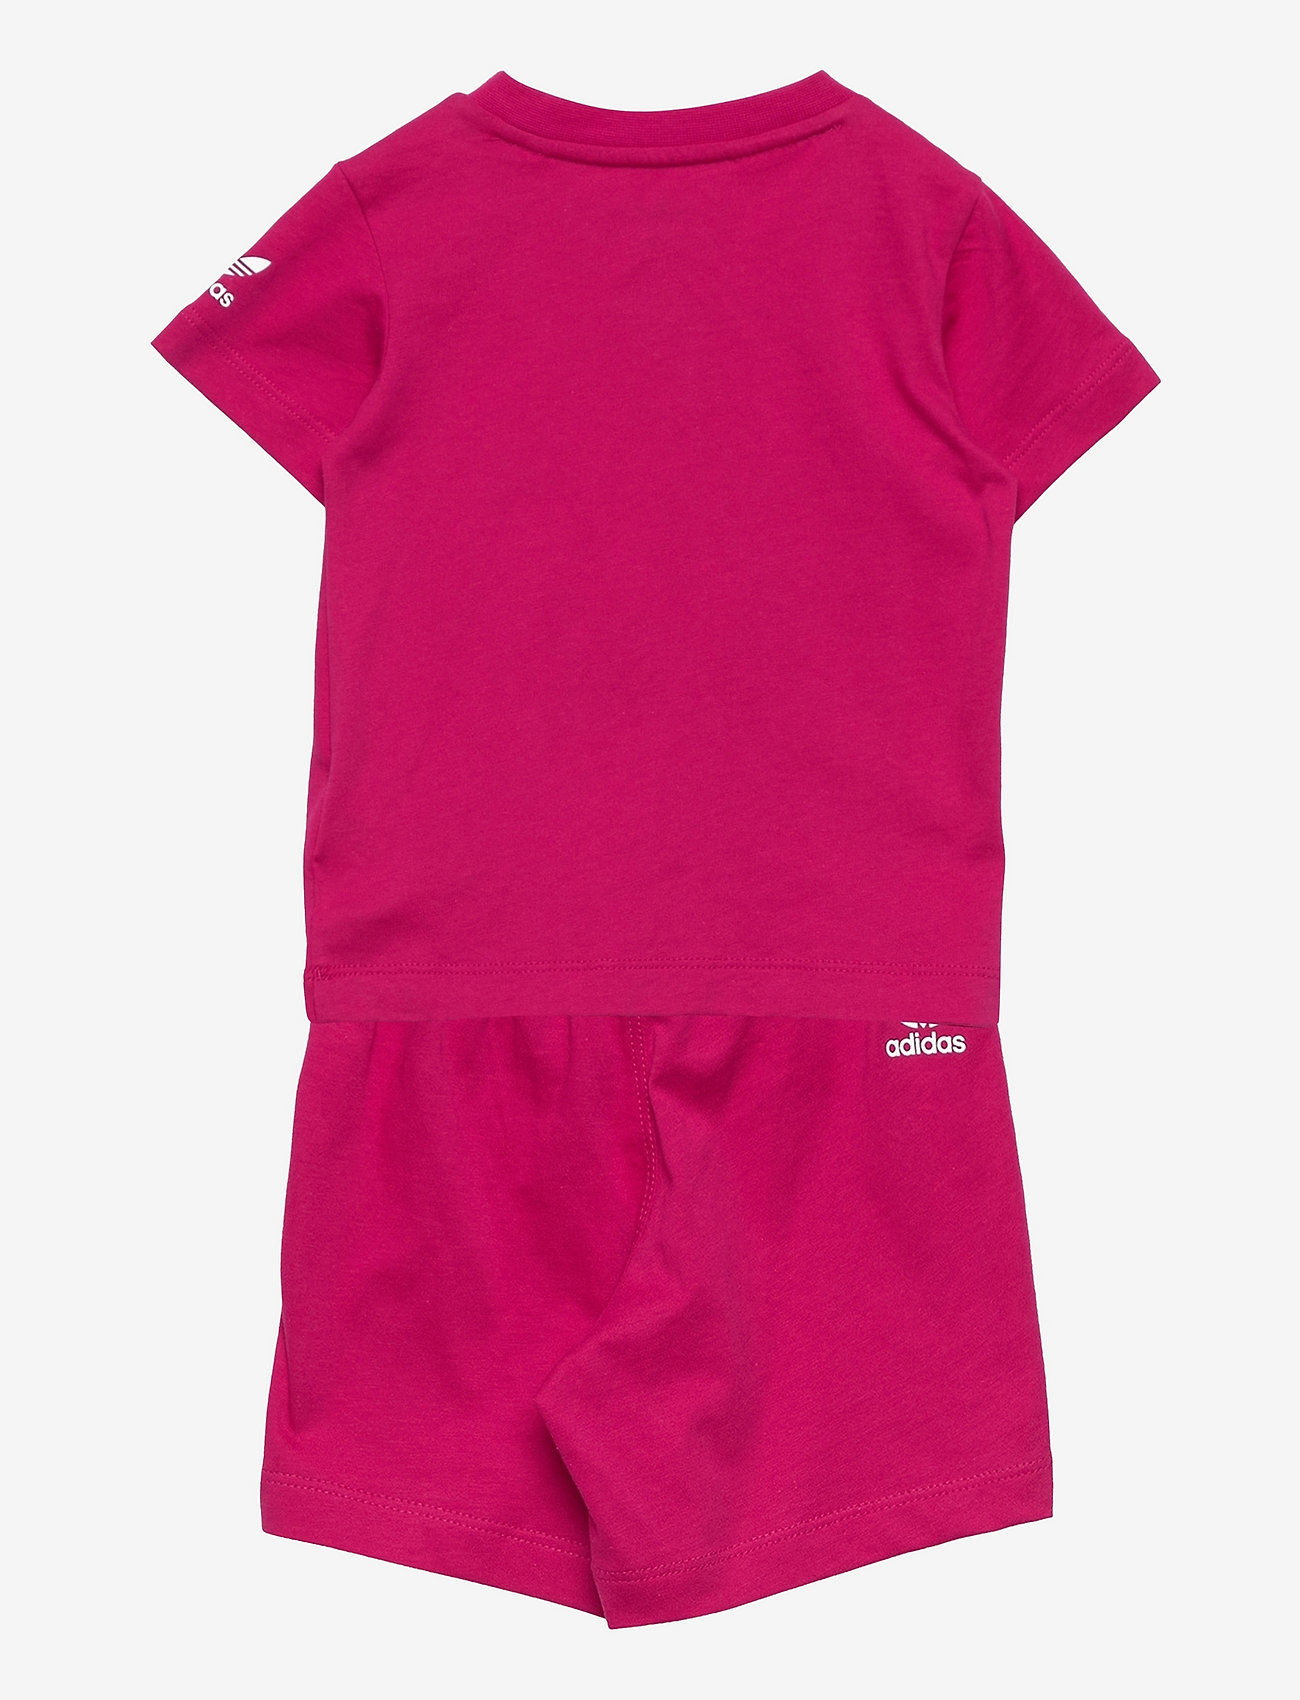 adidas Originals - Adicolor Shorts and Tee Set - sets with short-sleeved t-shirt - bopink - 1